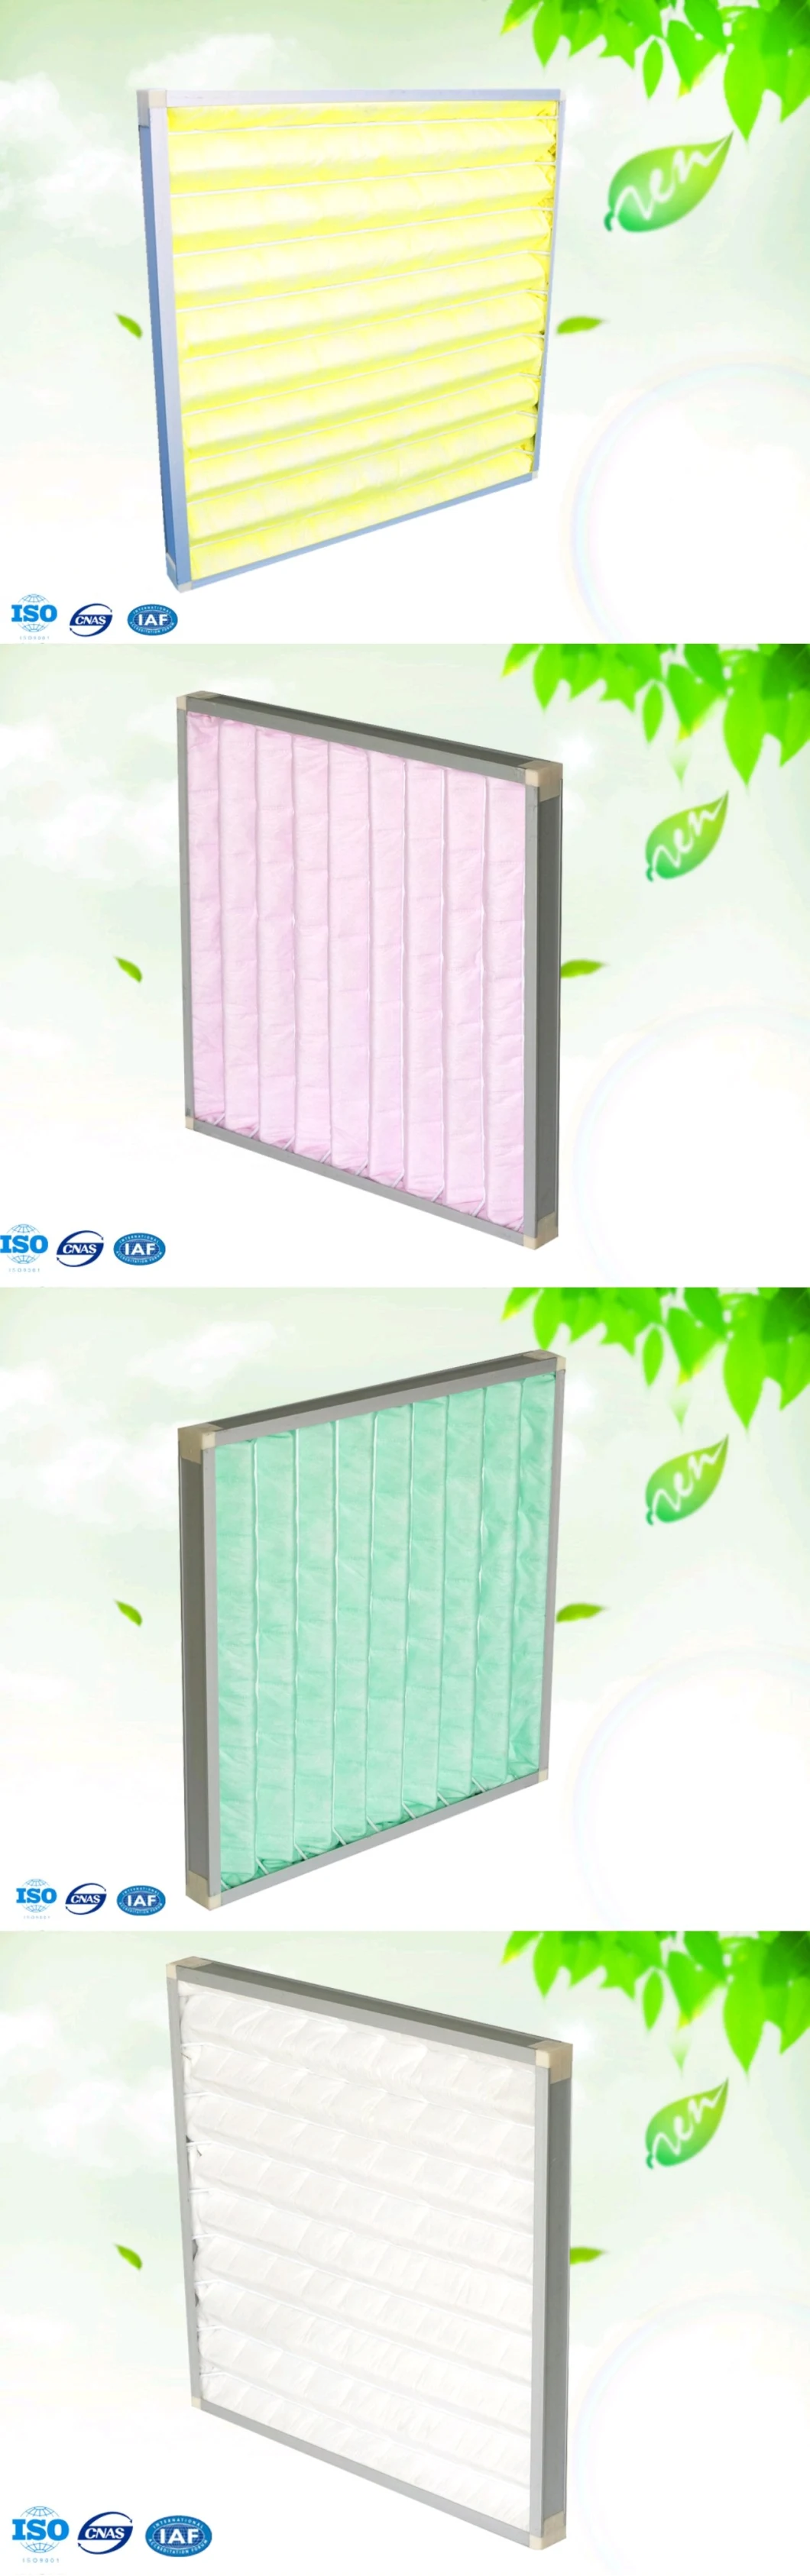 Medium Panel Air Filter for Central Air Conditioning Ventilation System